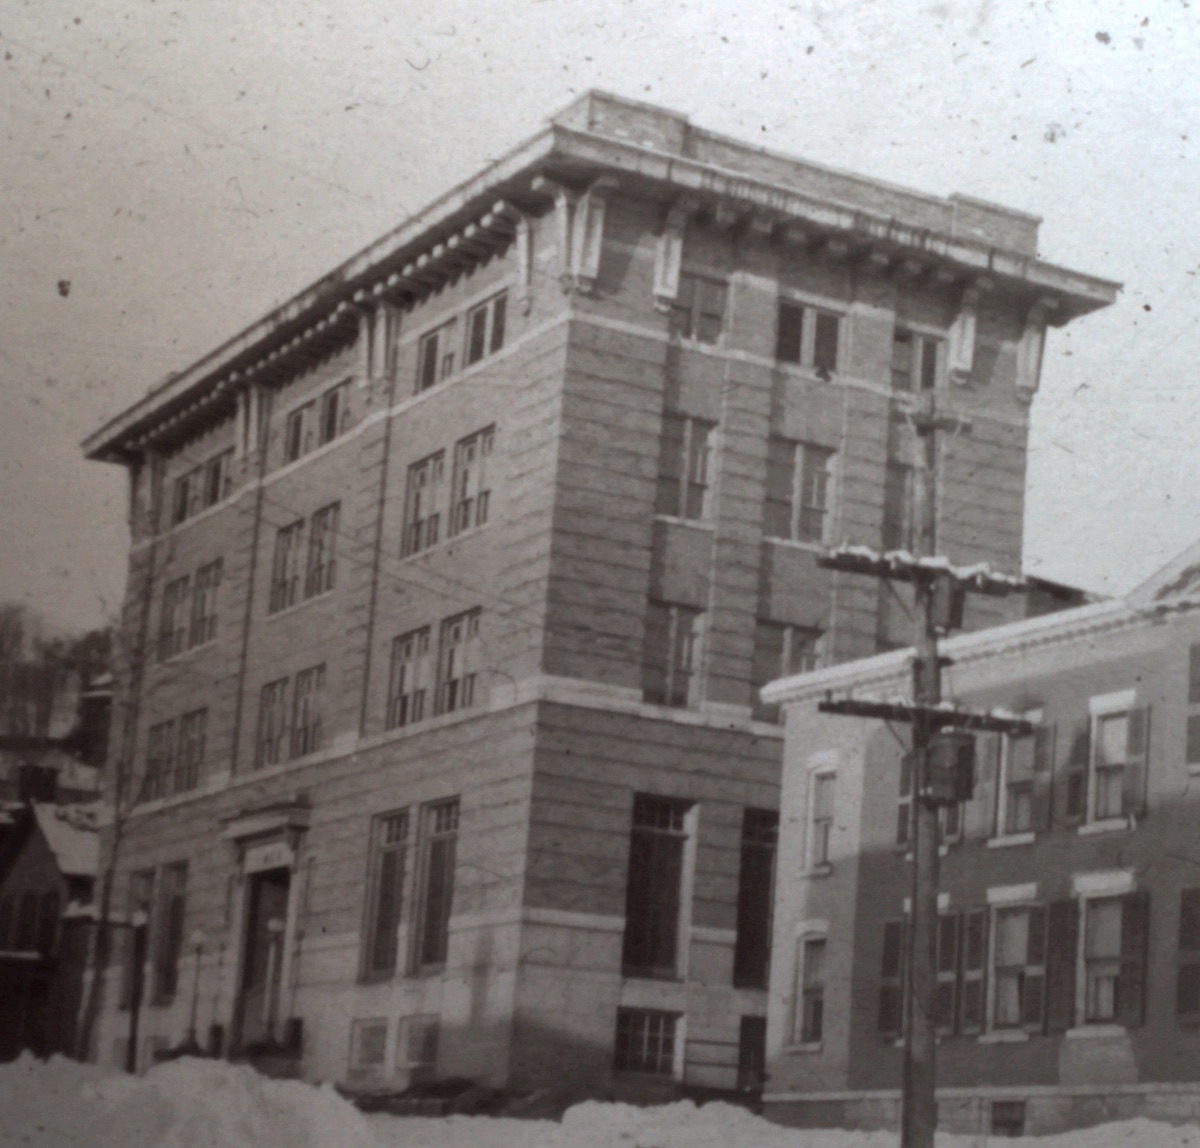 The Young Men's Christian Association building Circa 1920